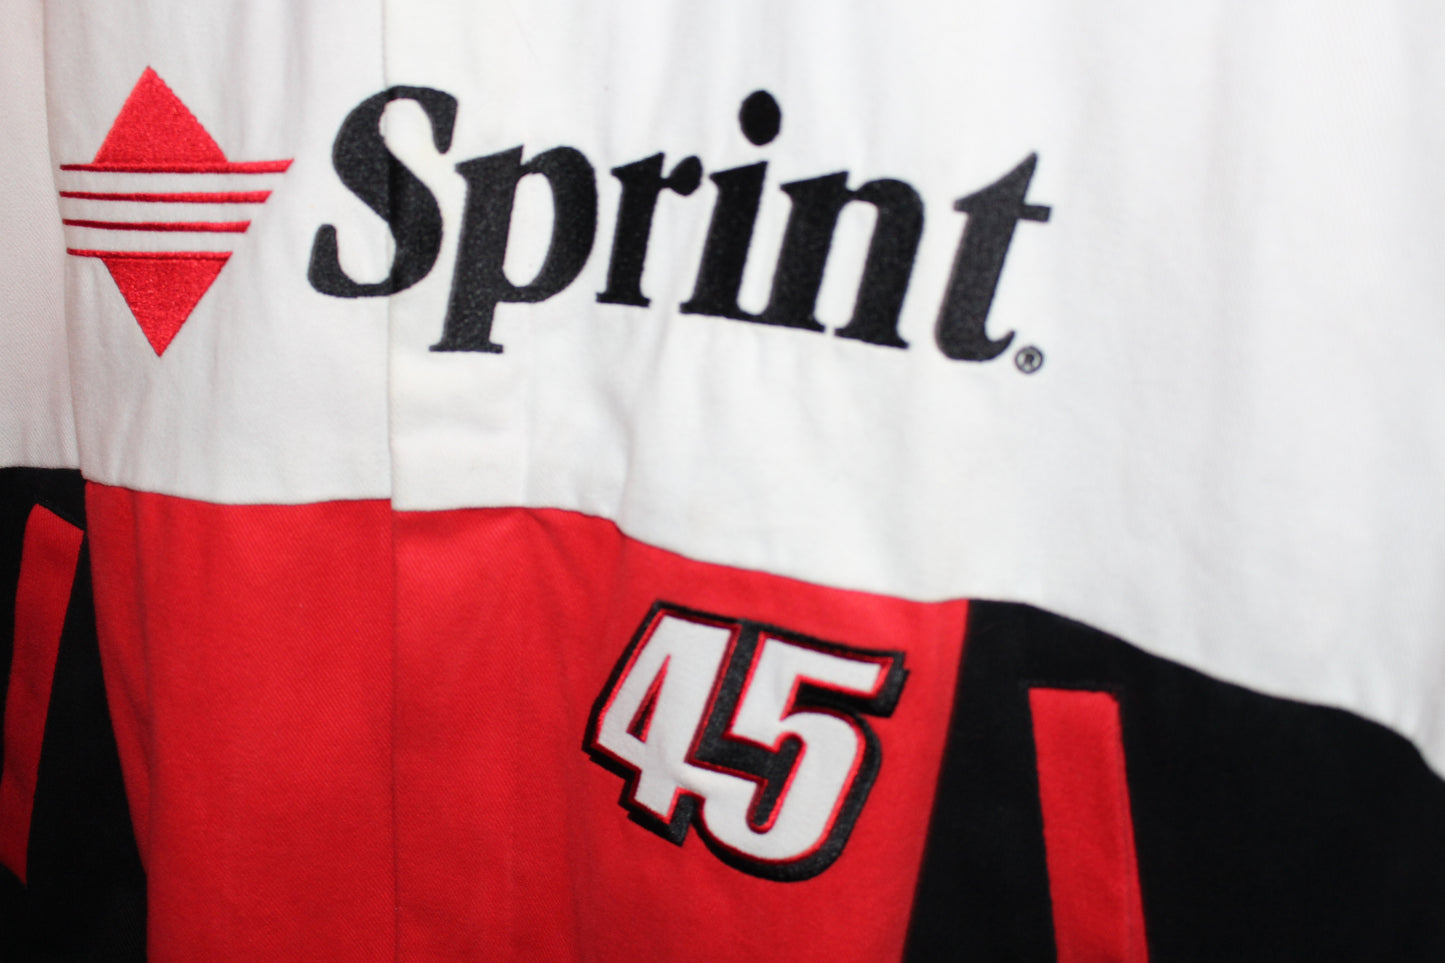 Rare Sprint Racing NASCAR Kyle Petty #45 (XL)